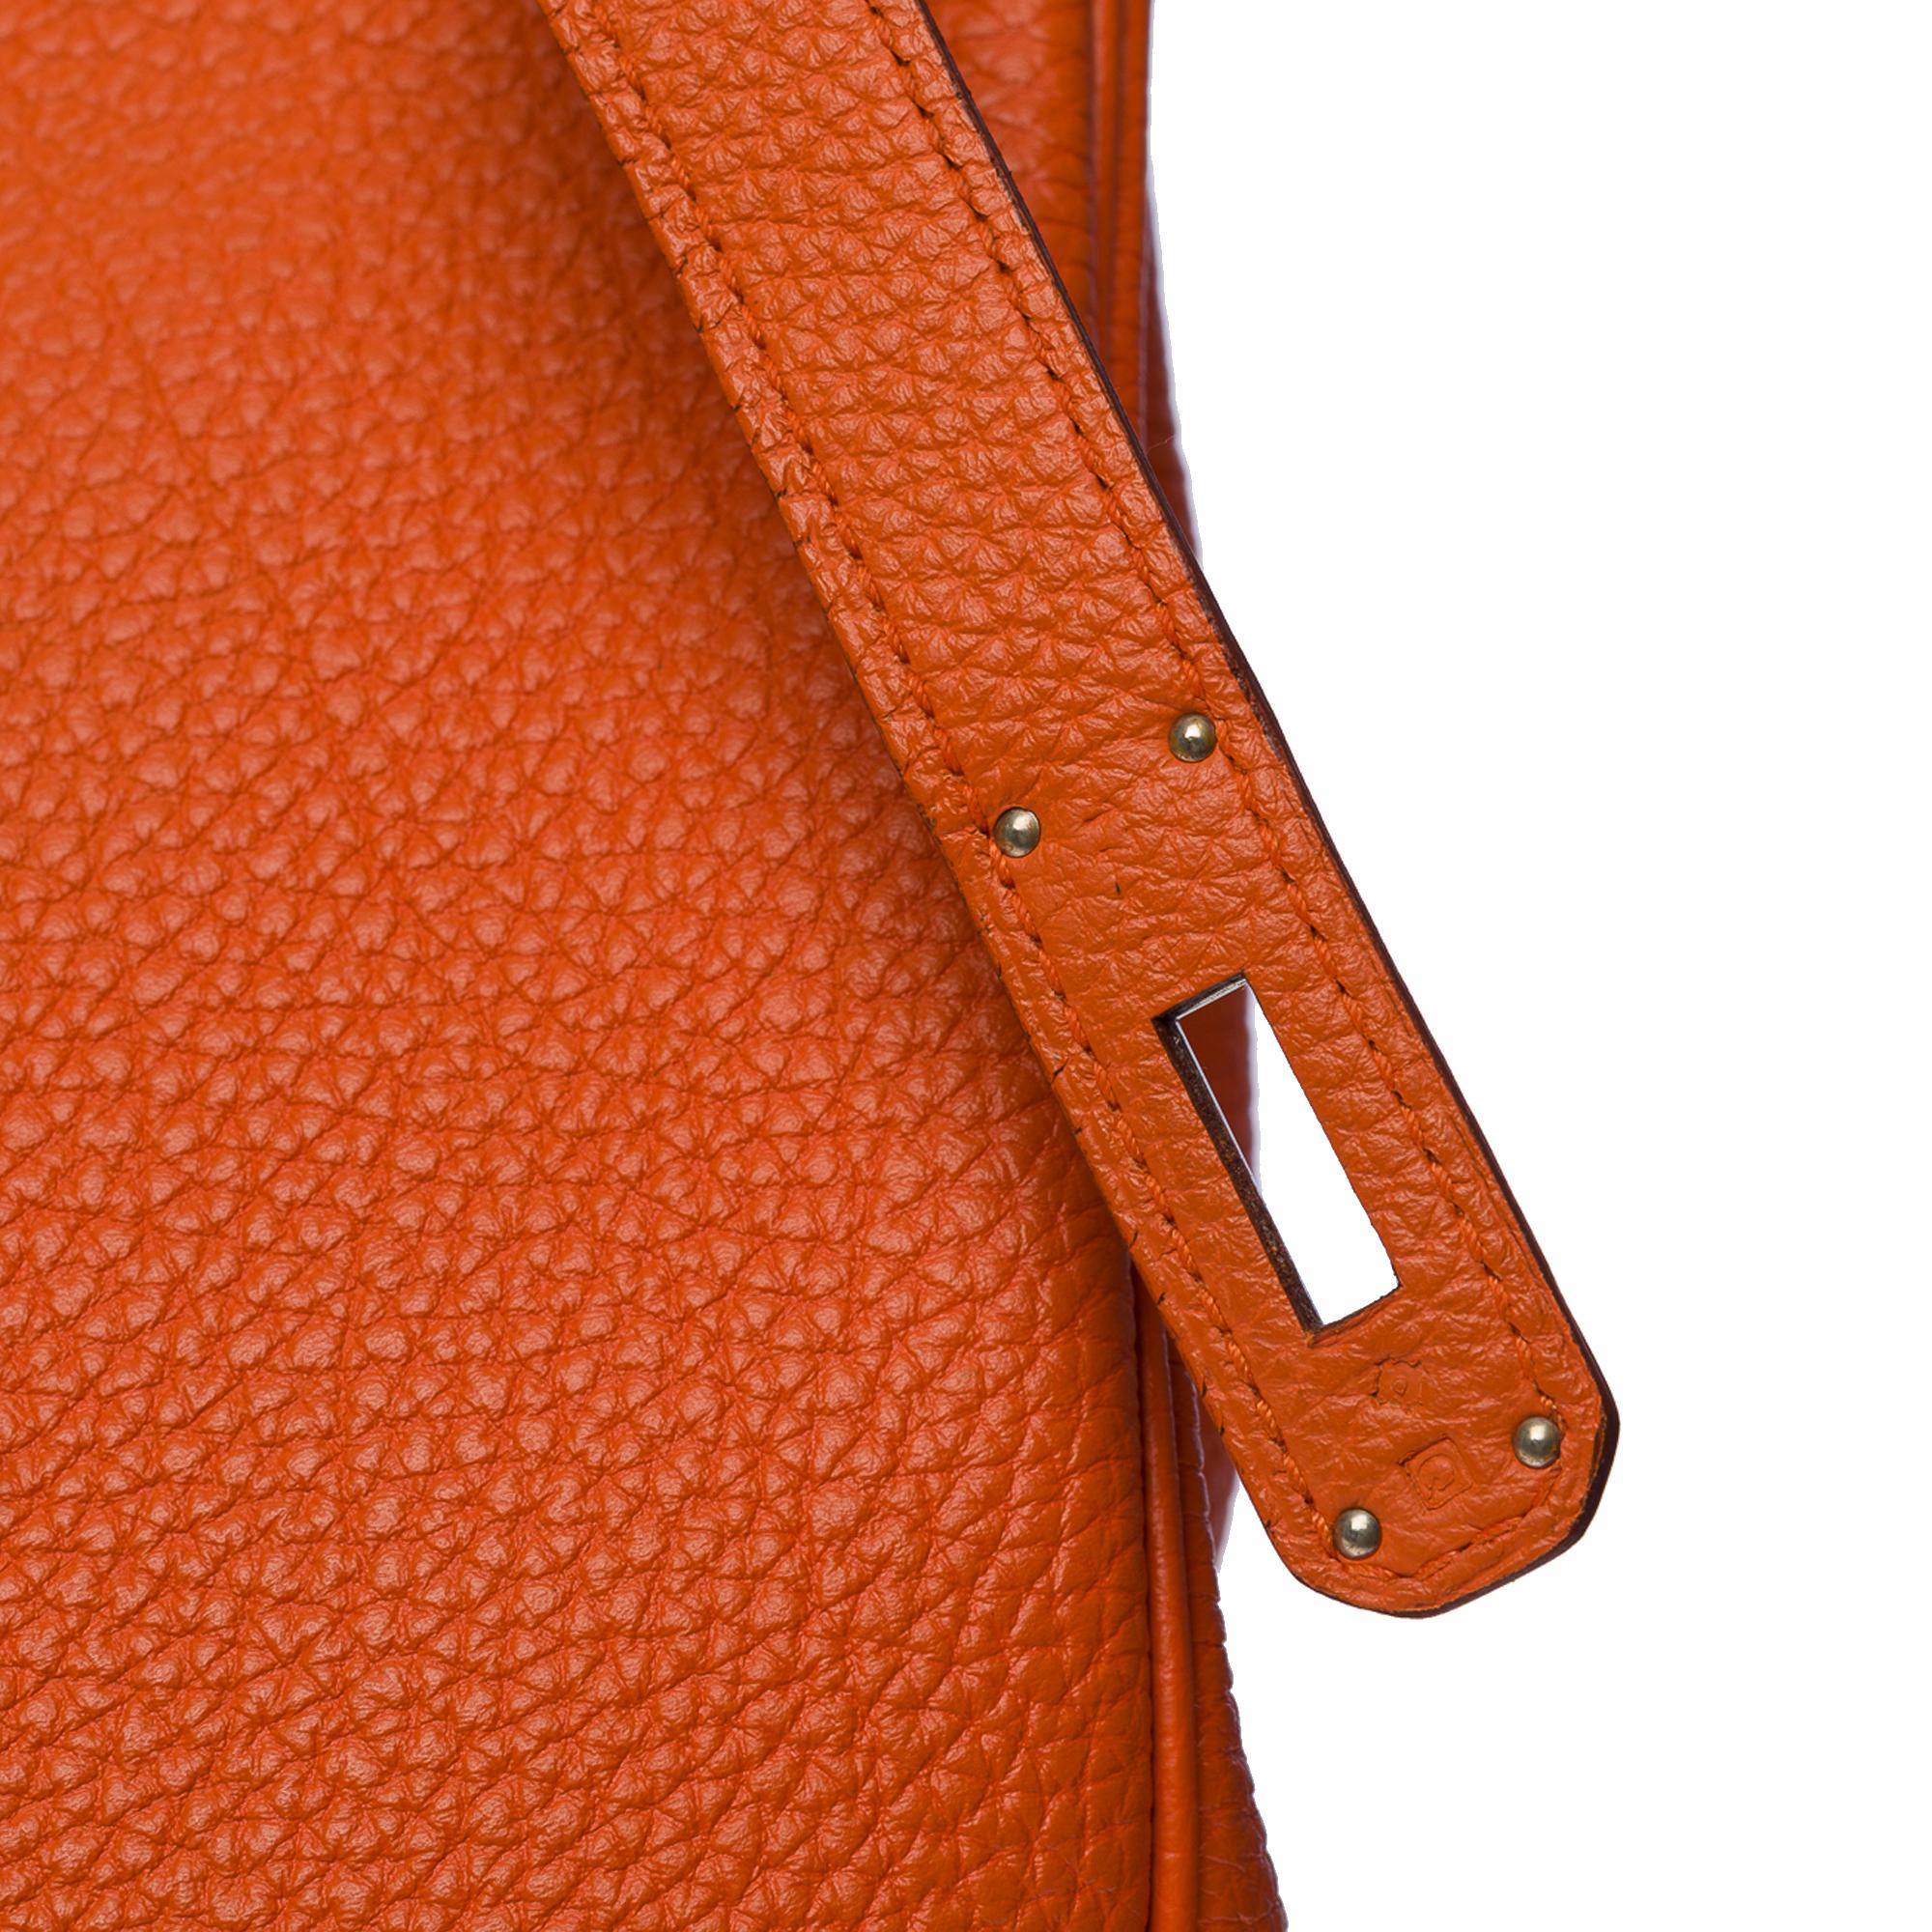 Stunning Hermes Birkin 40cm handbag in Orange Terre battue Togo leather, SHW 3